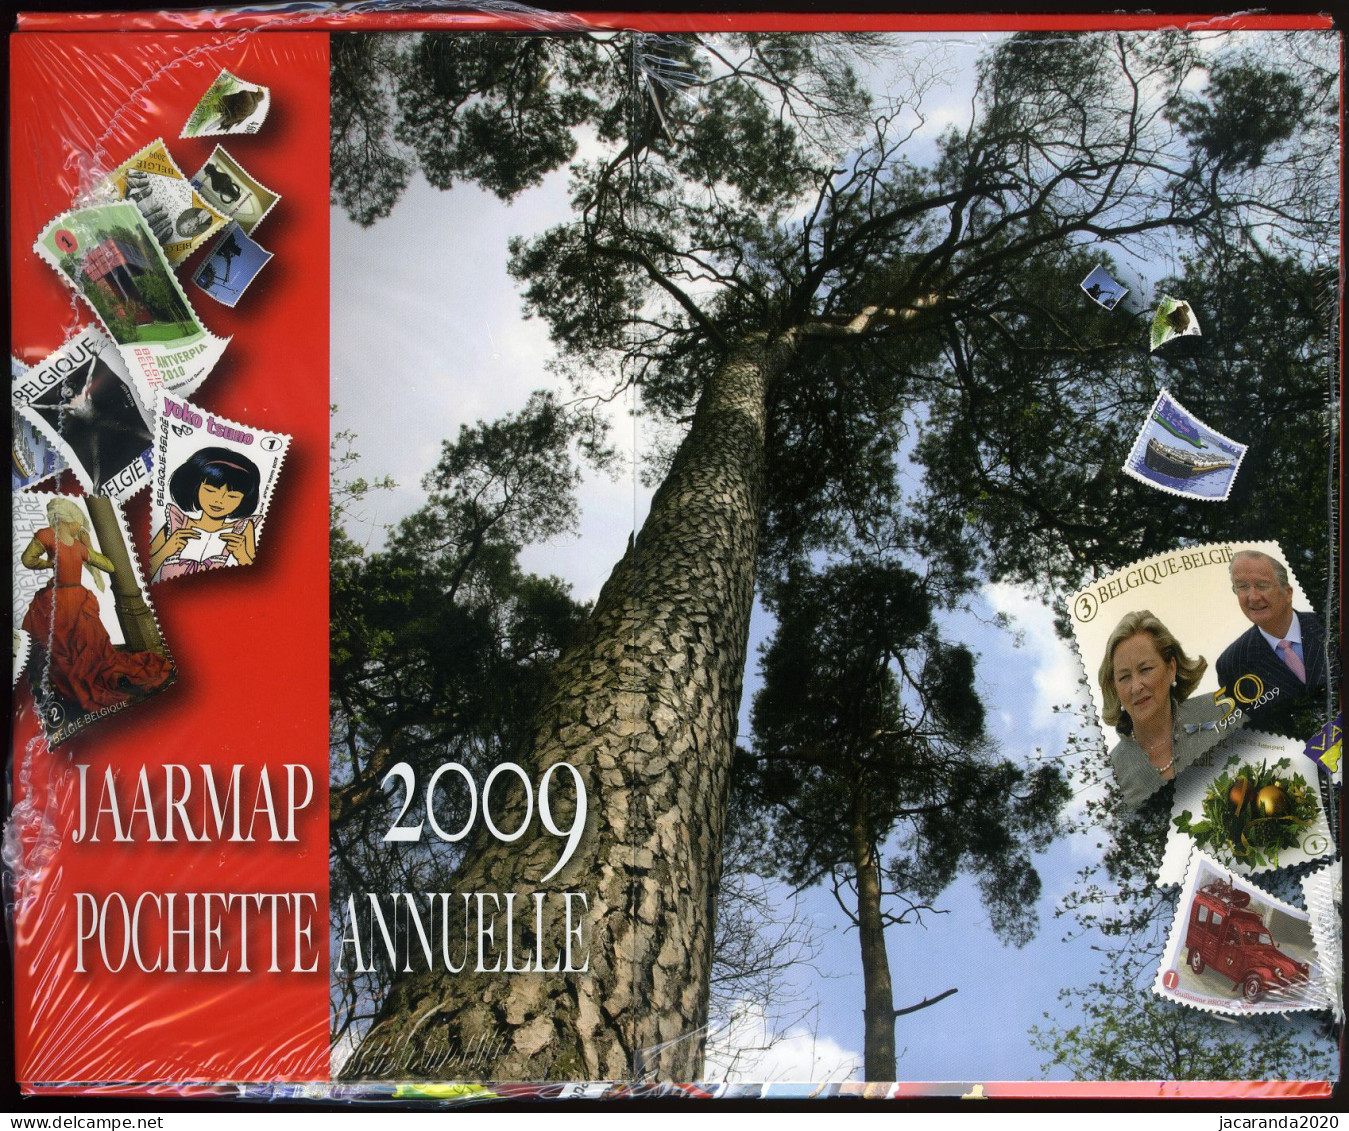 België 2009 - Jaarmap - Pochette Annuelle - Met Zwart-wit Velletje Van Europa - Originele Verpakking - Scellé - Sealed - Annate Complete